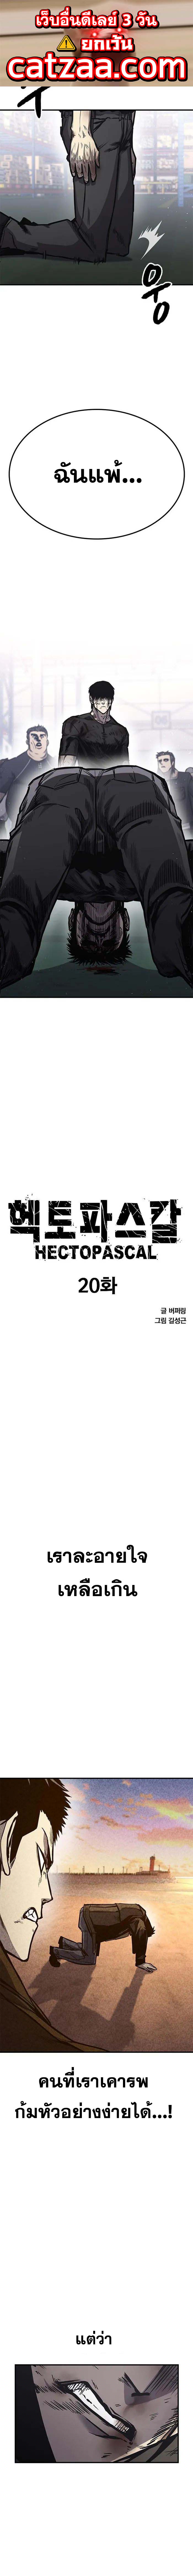 Hectopascals 20 (1)